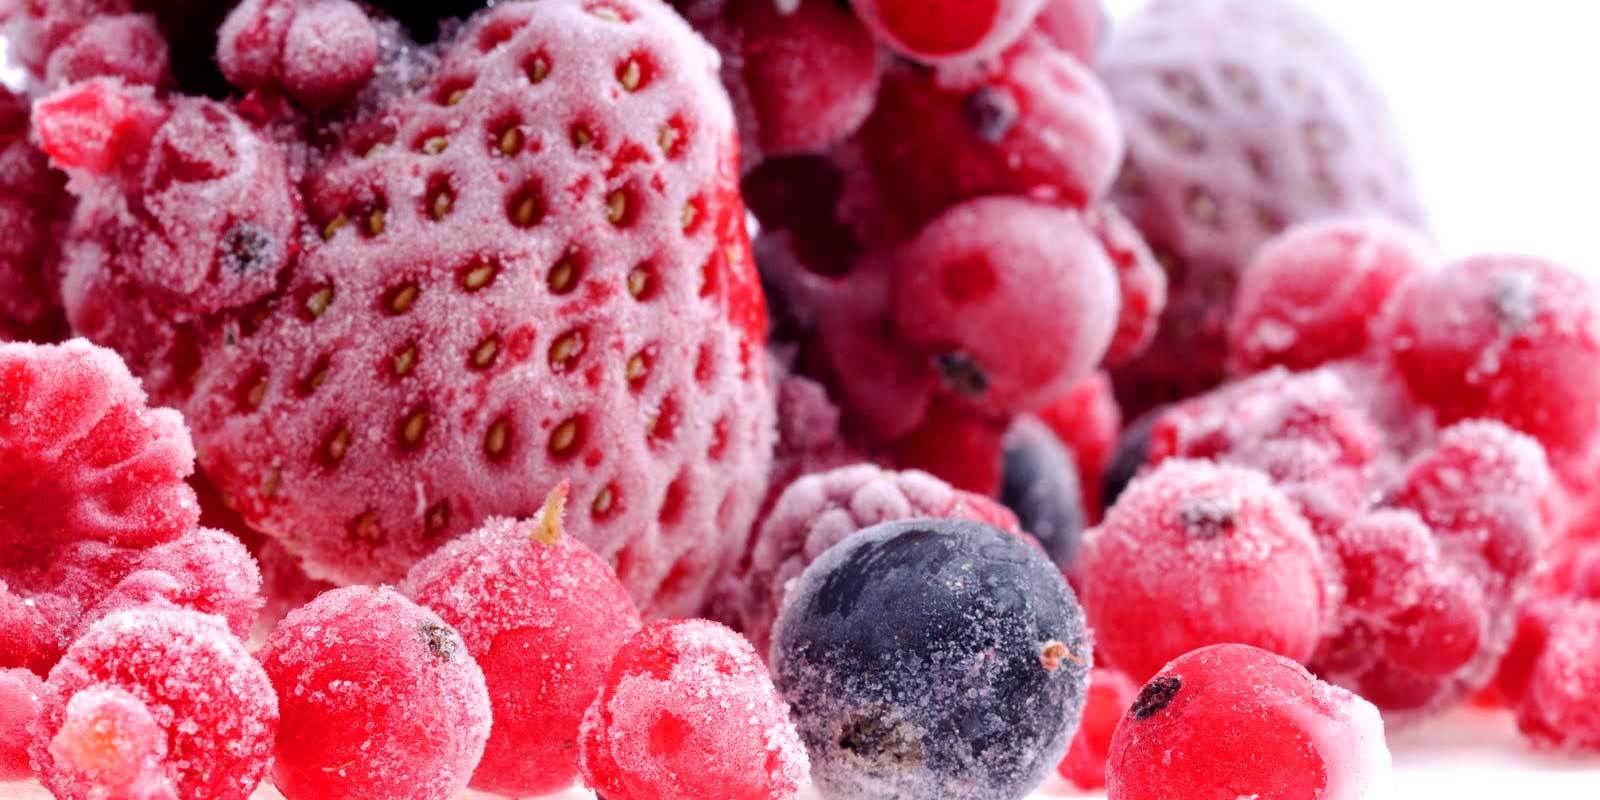 Mrazene ovoce a zelenina At uz na domaci zmrzlinu, vlastni dzemove vytvory nebo lahodny dort s mrazenym ovocem, mate skladem spravne mnozstvi. Ke spontannimu zpracovani zmrazeneho ovoce neni potreba zadna magie.